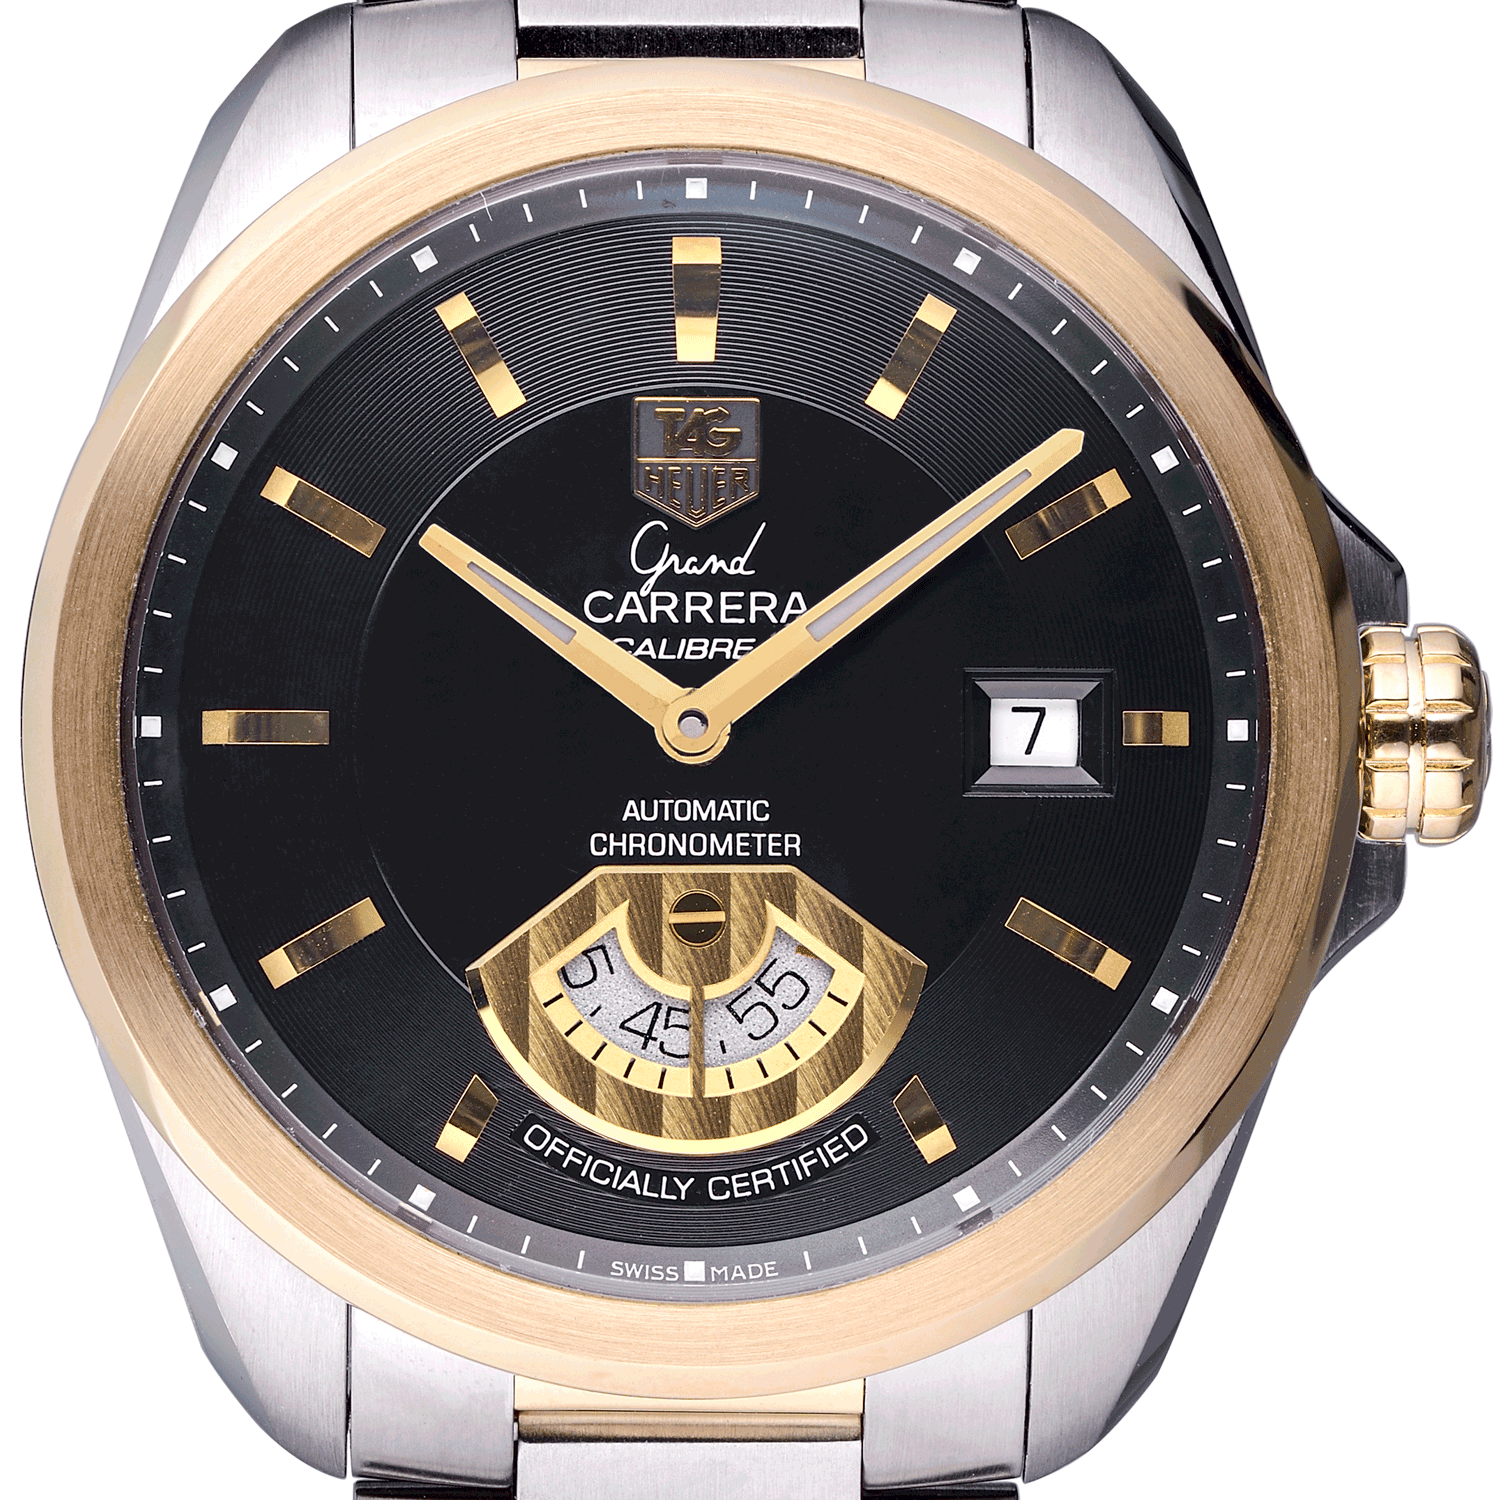 Tag Heuer Grand Carrera Watches, ref WAV515A